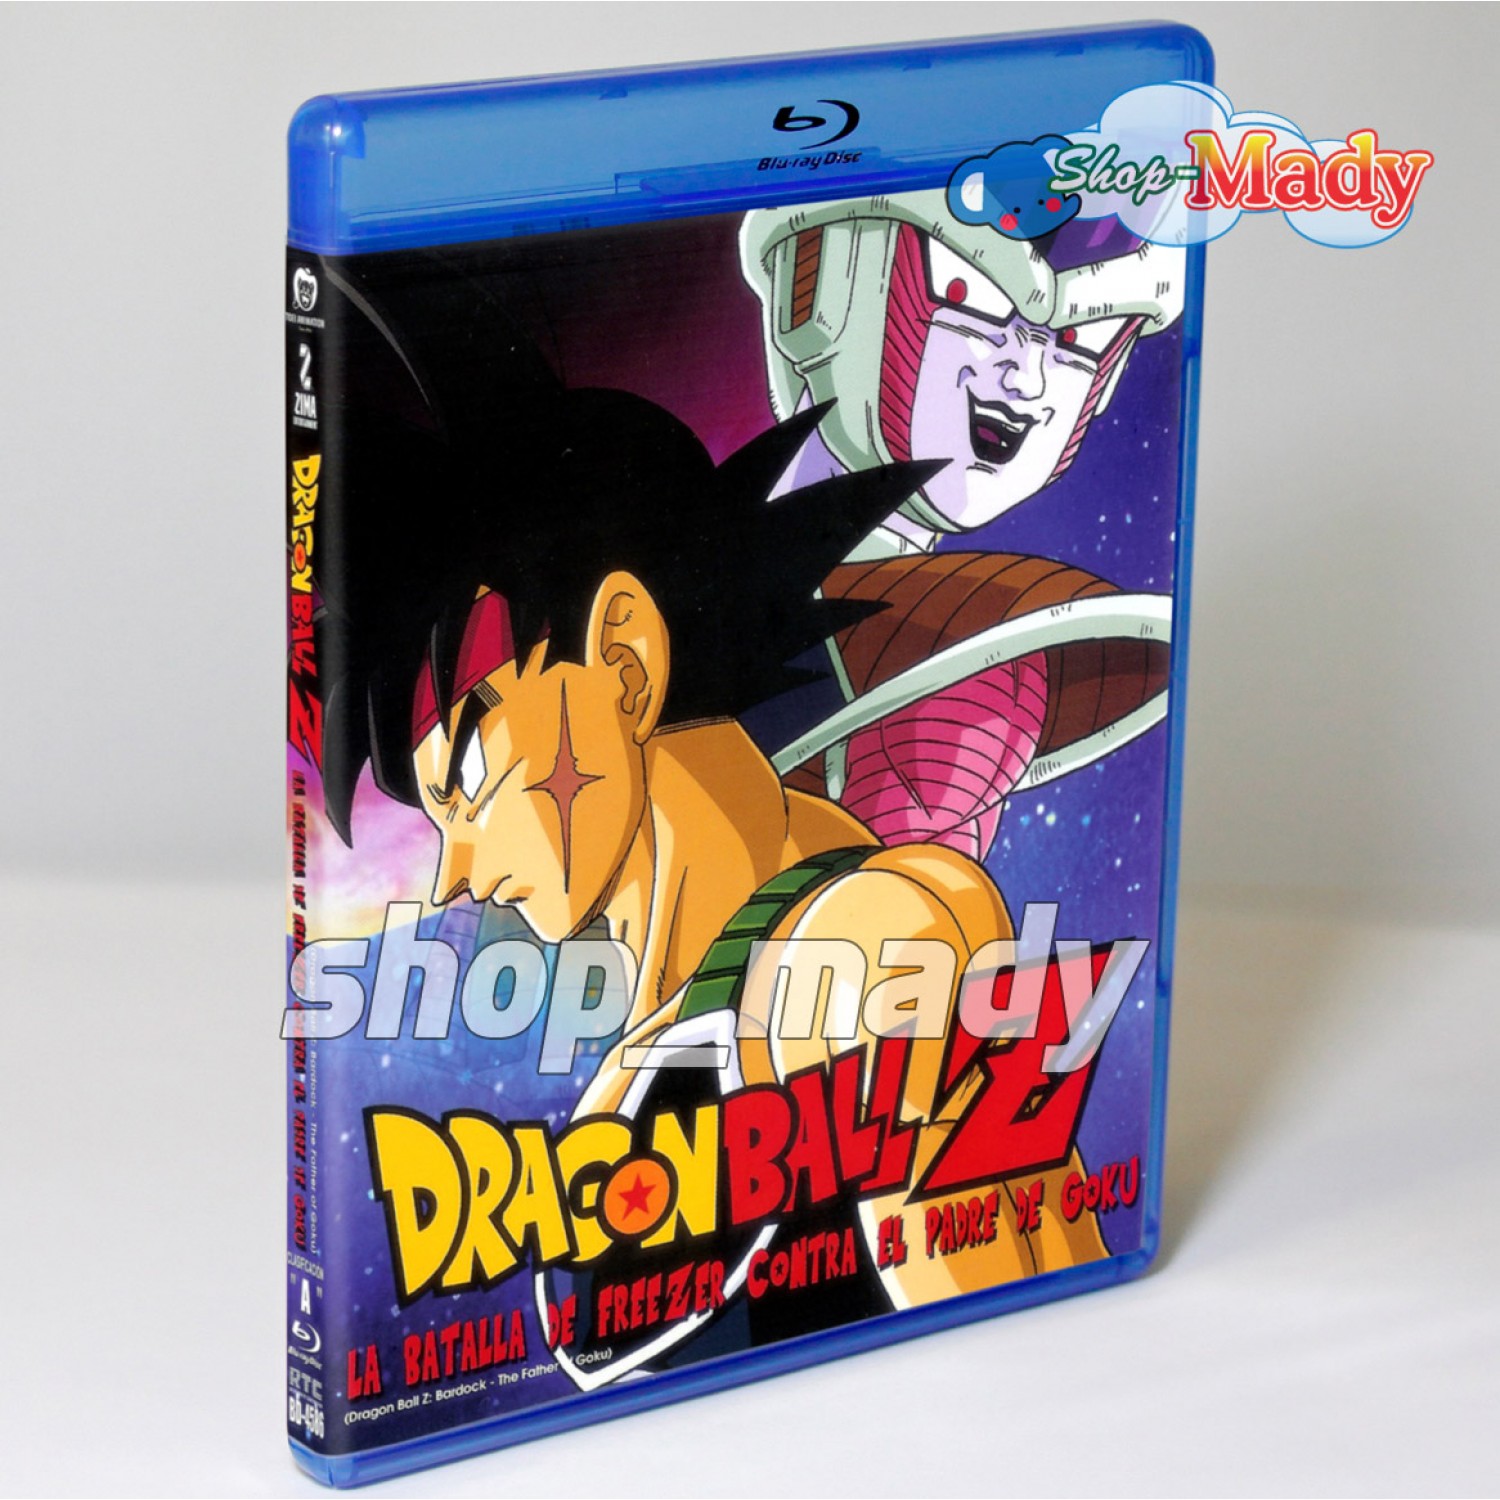 Dragon Ball Z La Batalla de Freezer contra el Padre de Goku Blu-ray -  7506036086849